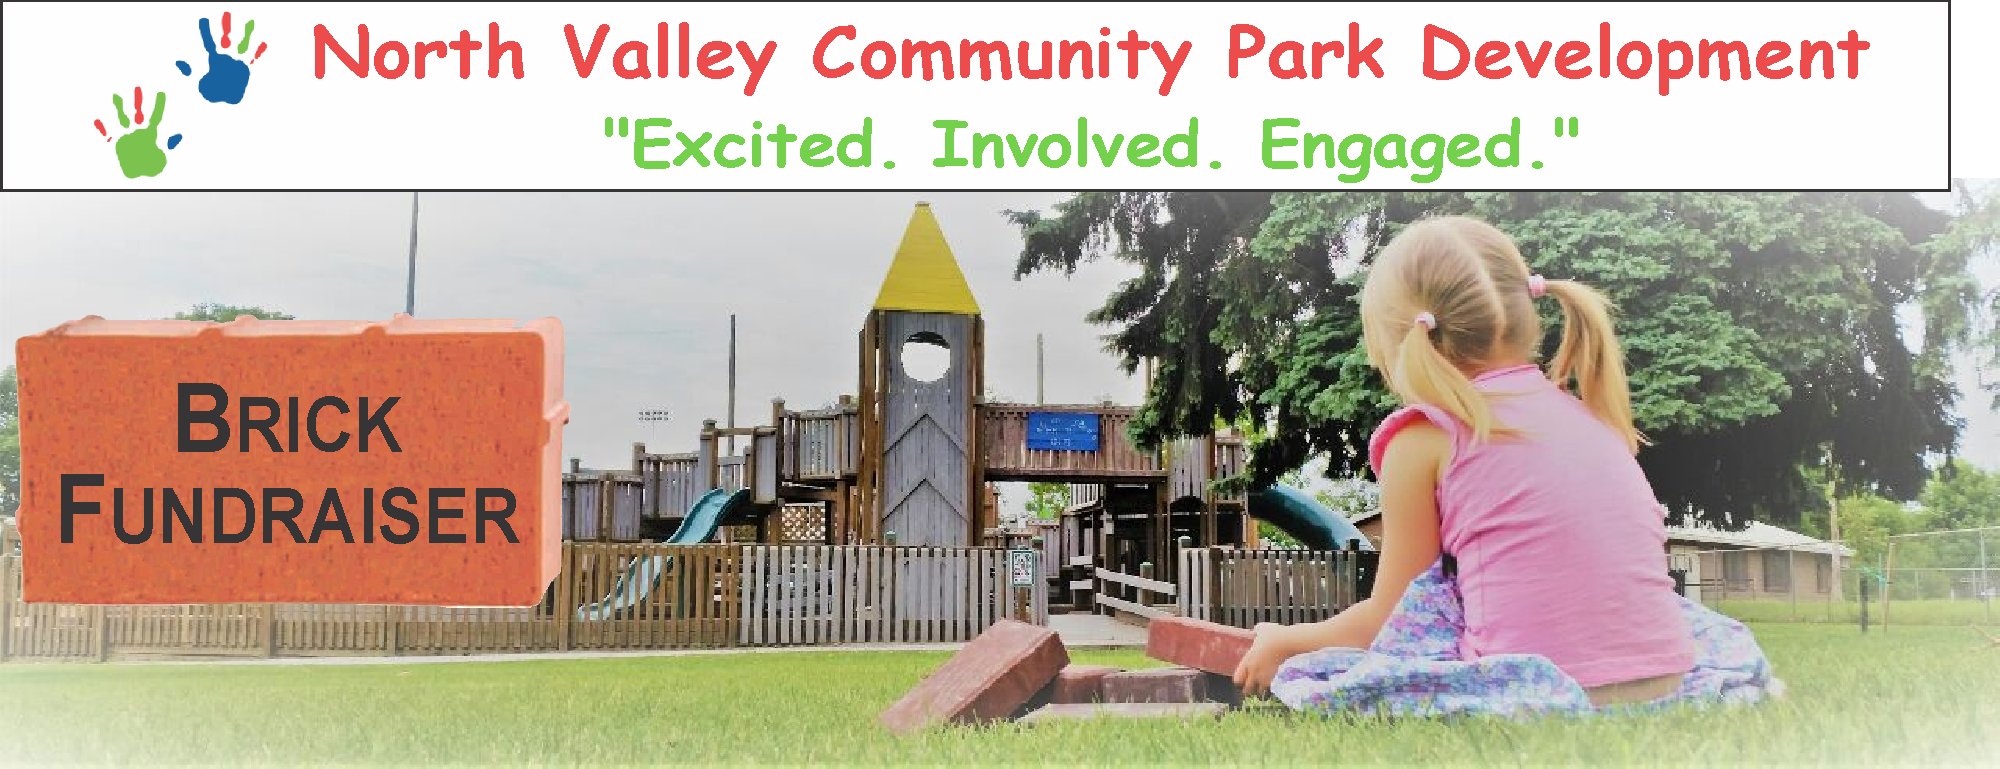 North Valley Community Park Development